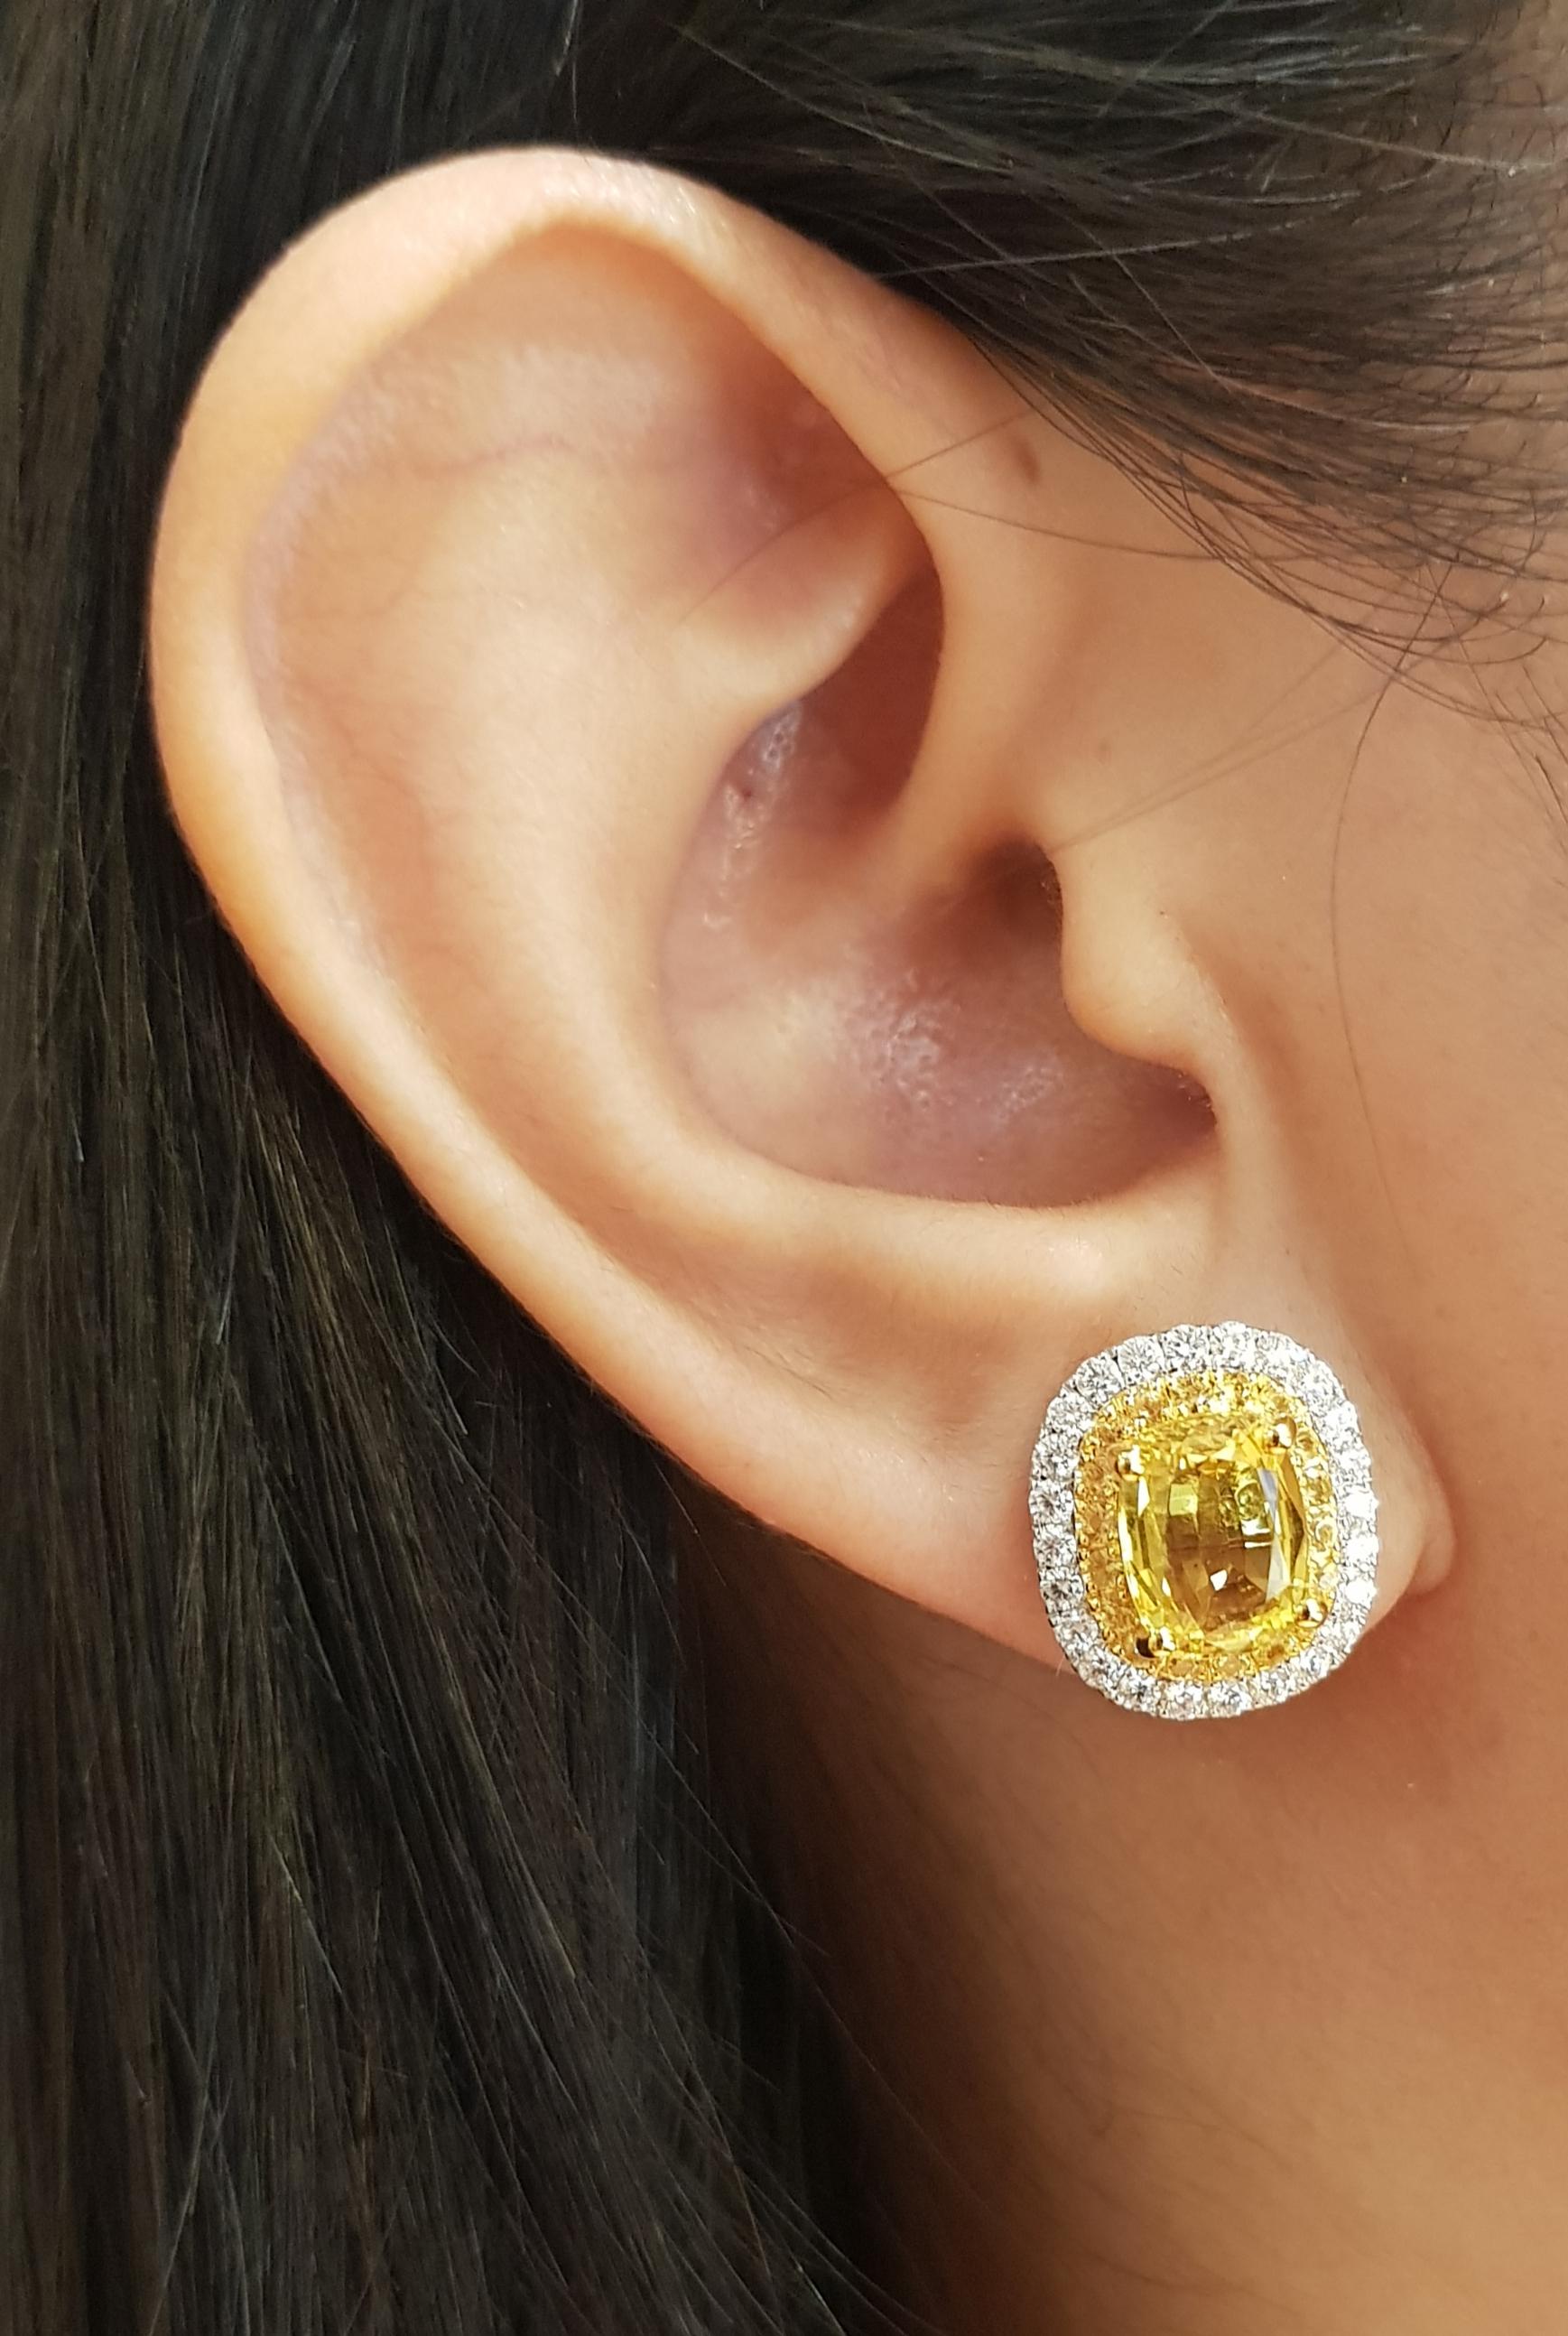 Yellow Sapphire 4.92 carats, Yellow Sapphire 0.69 carat and Diamond 0.80 carat Earrings set in 18K Gold/White Gold Settings

Width: 1.4 cm 
Length: 2.0 cm
Total Weight: 8.08 grams

